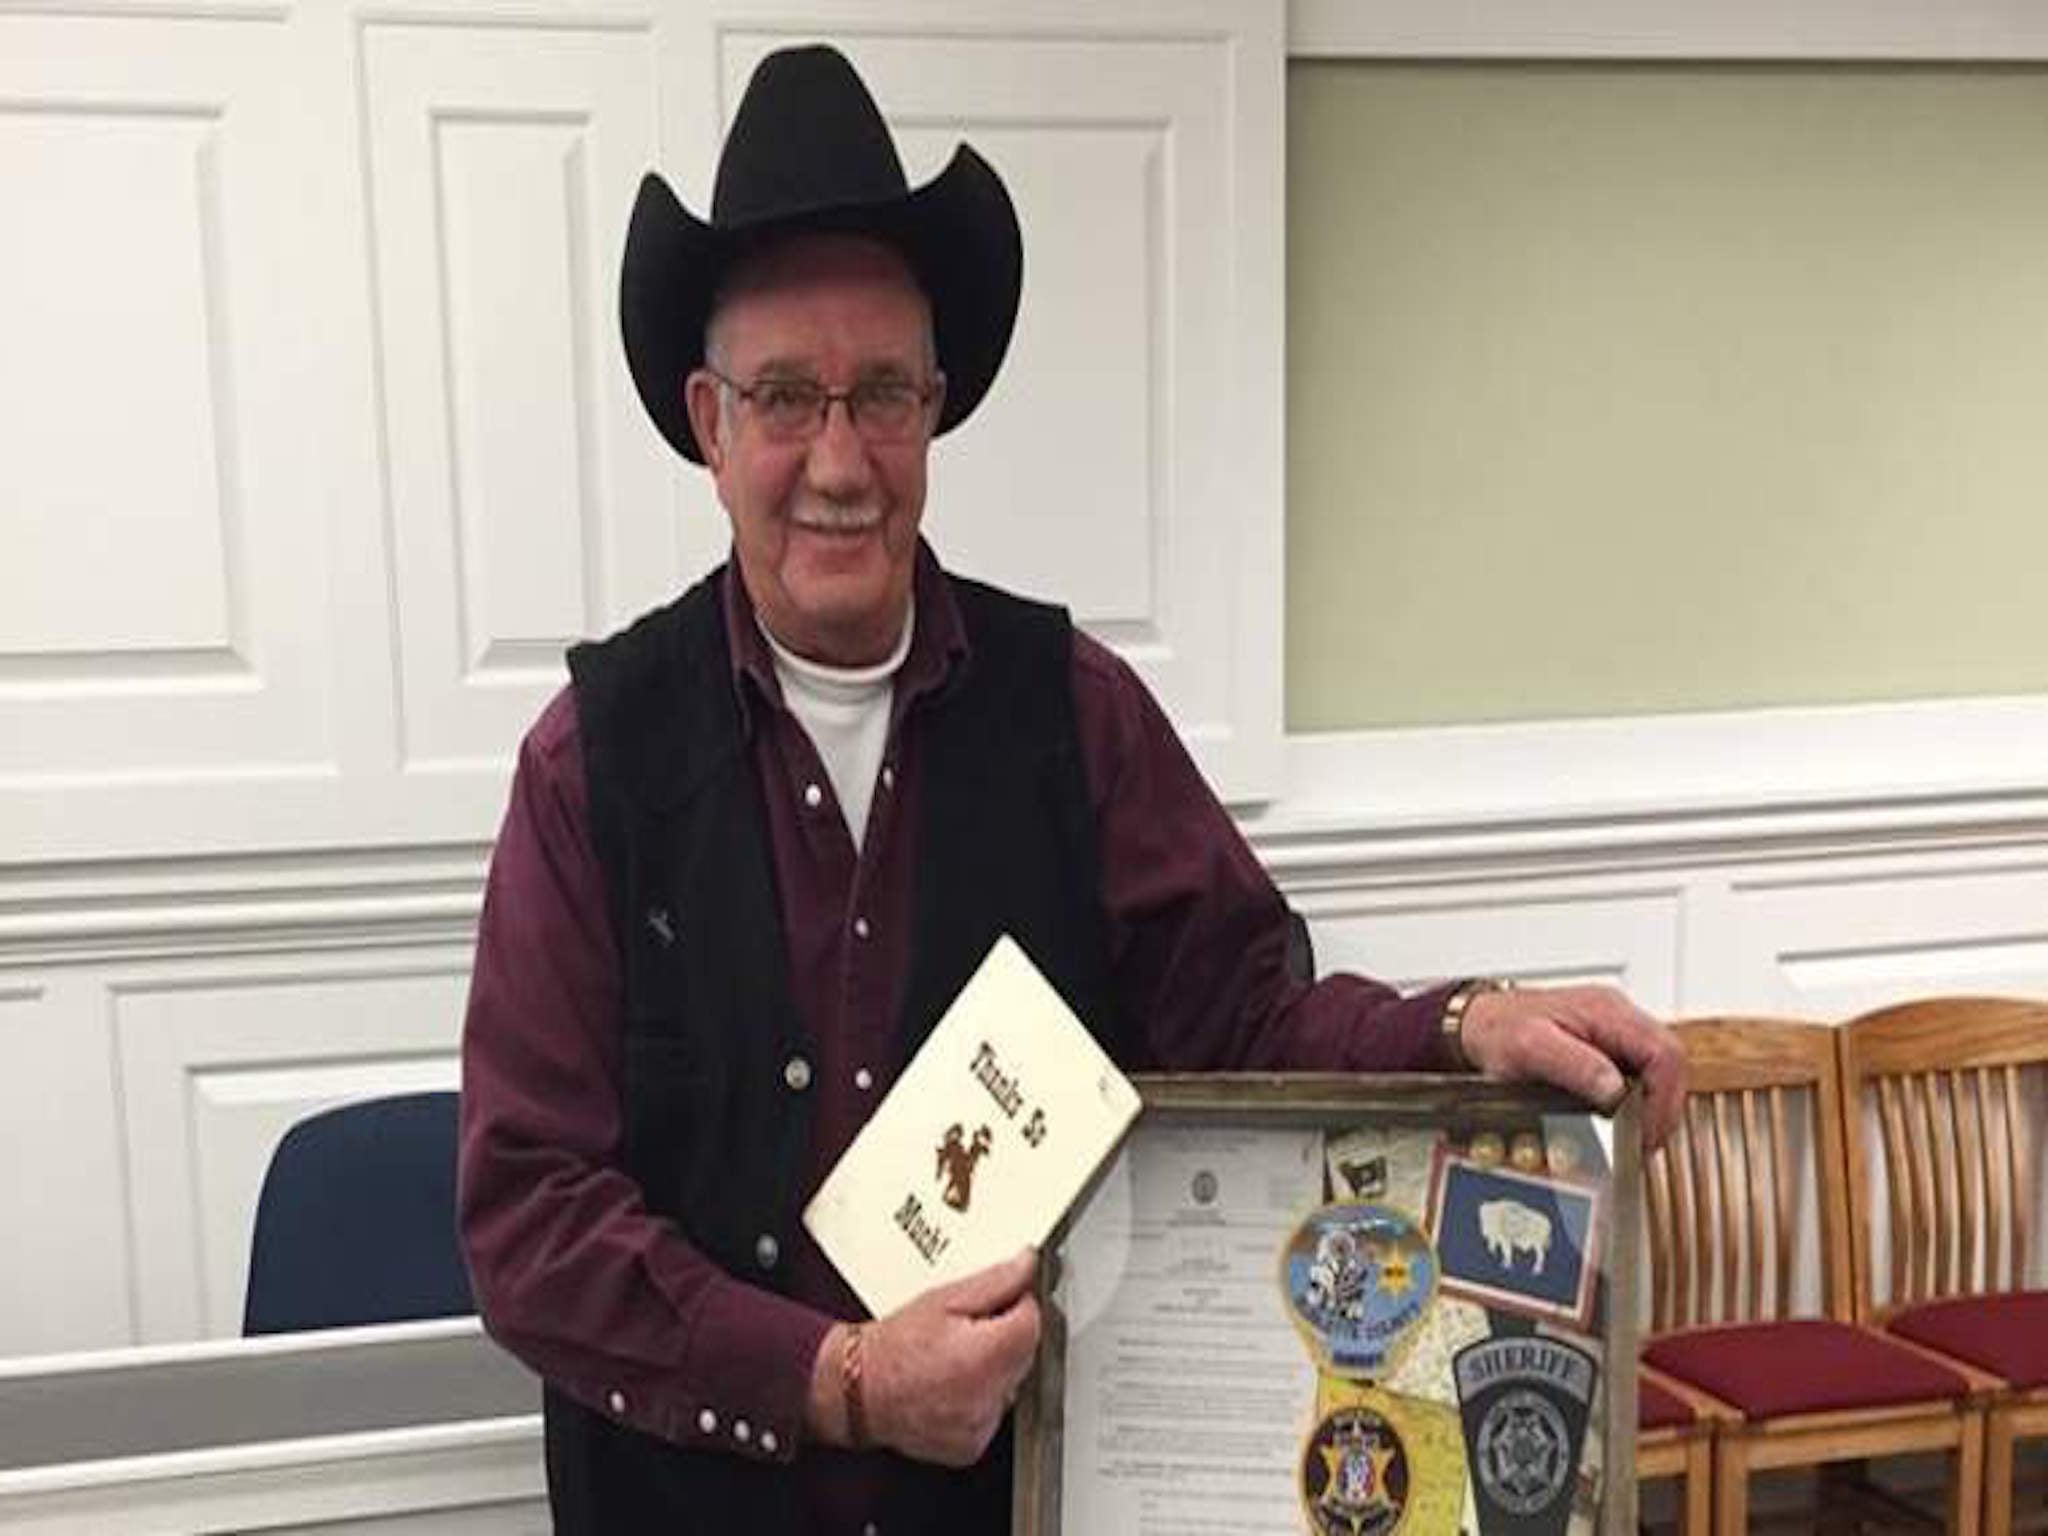 Sheriff's deputy Gene Bryson said he had worn a cowboy hat since he was 19